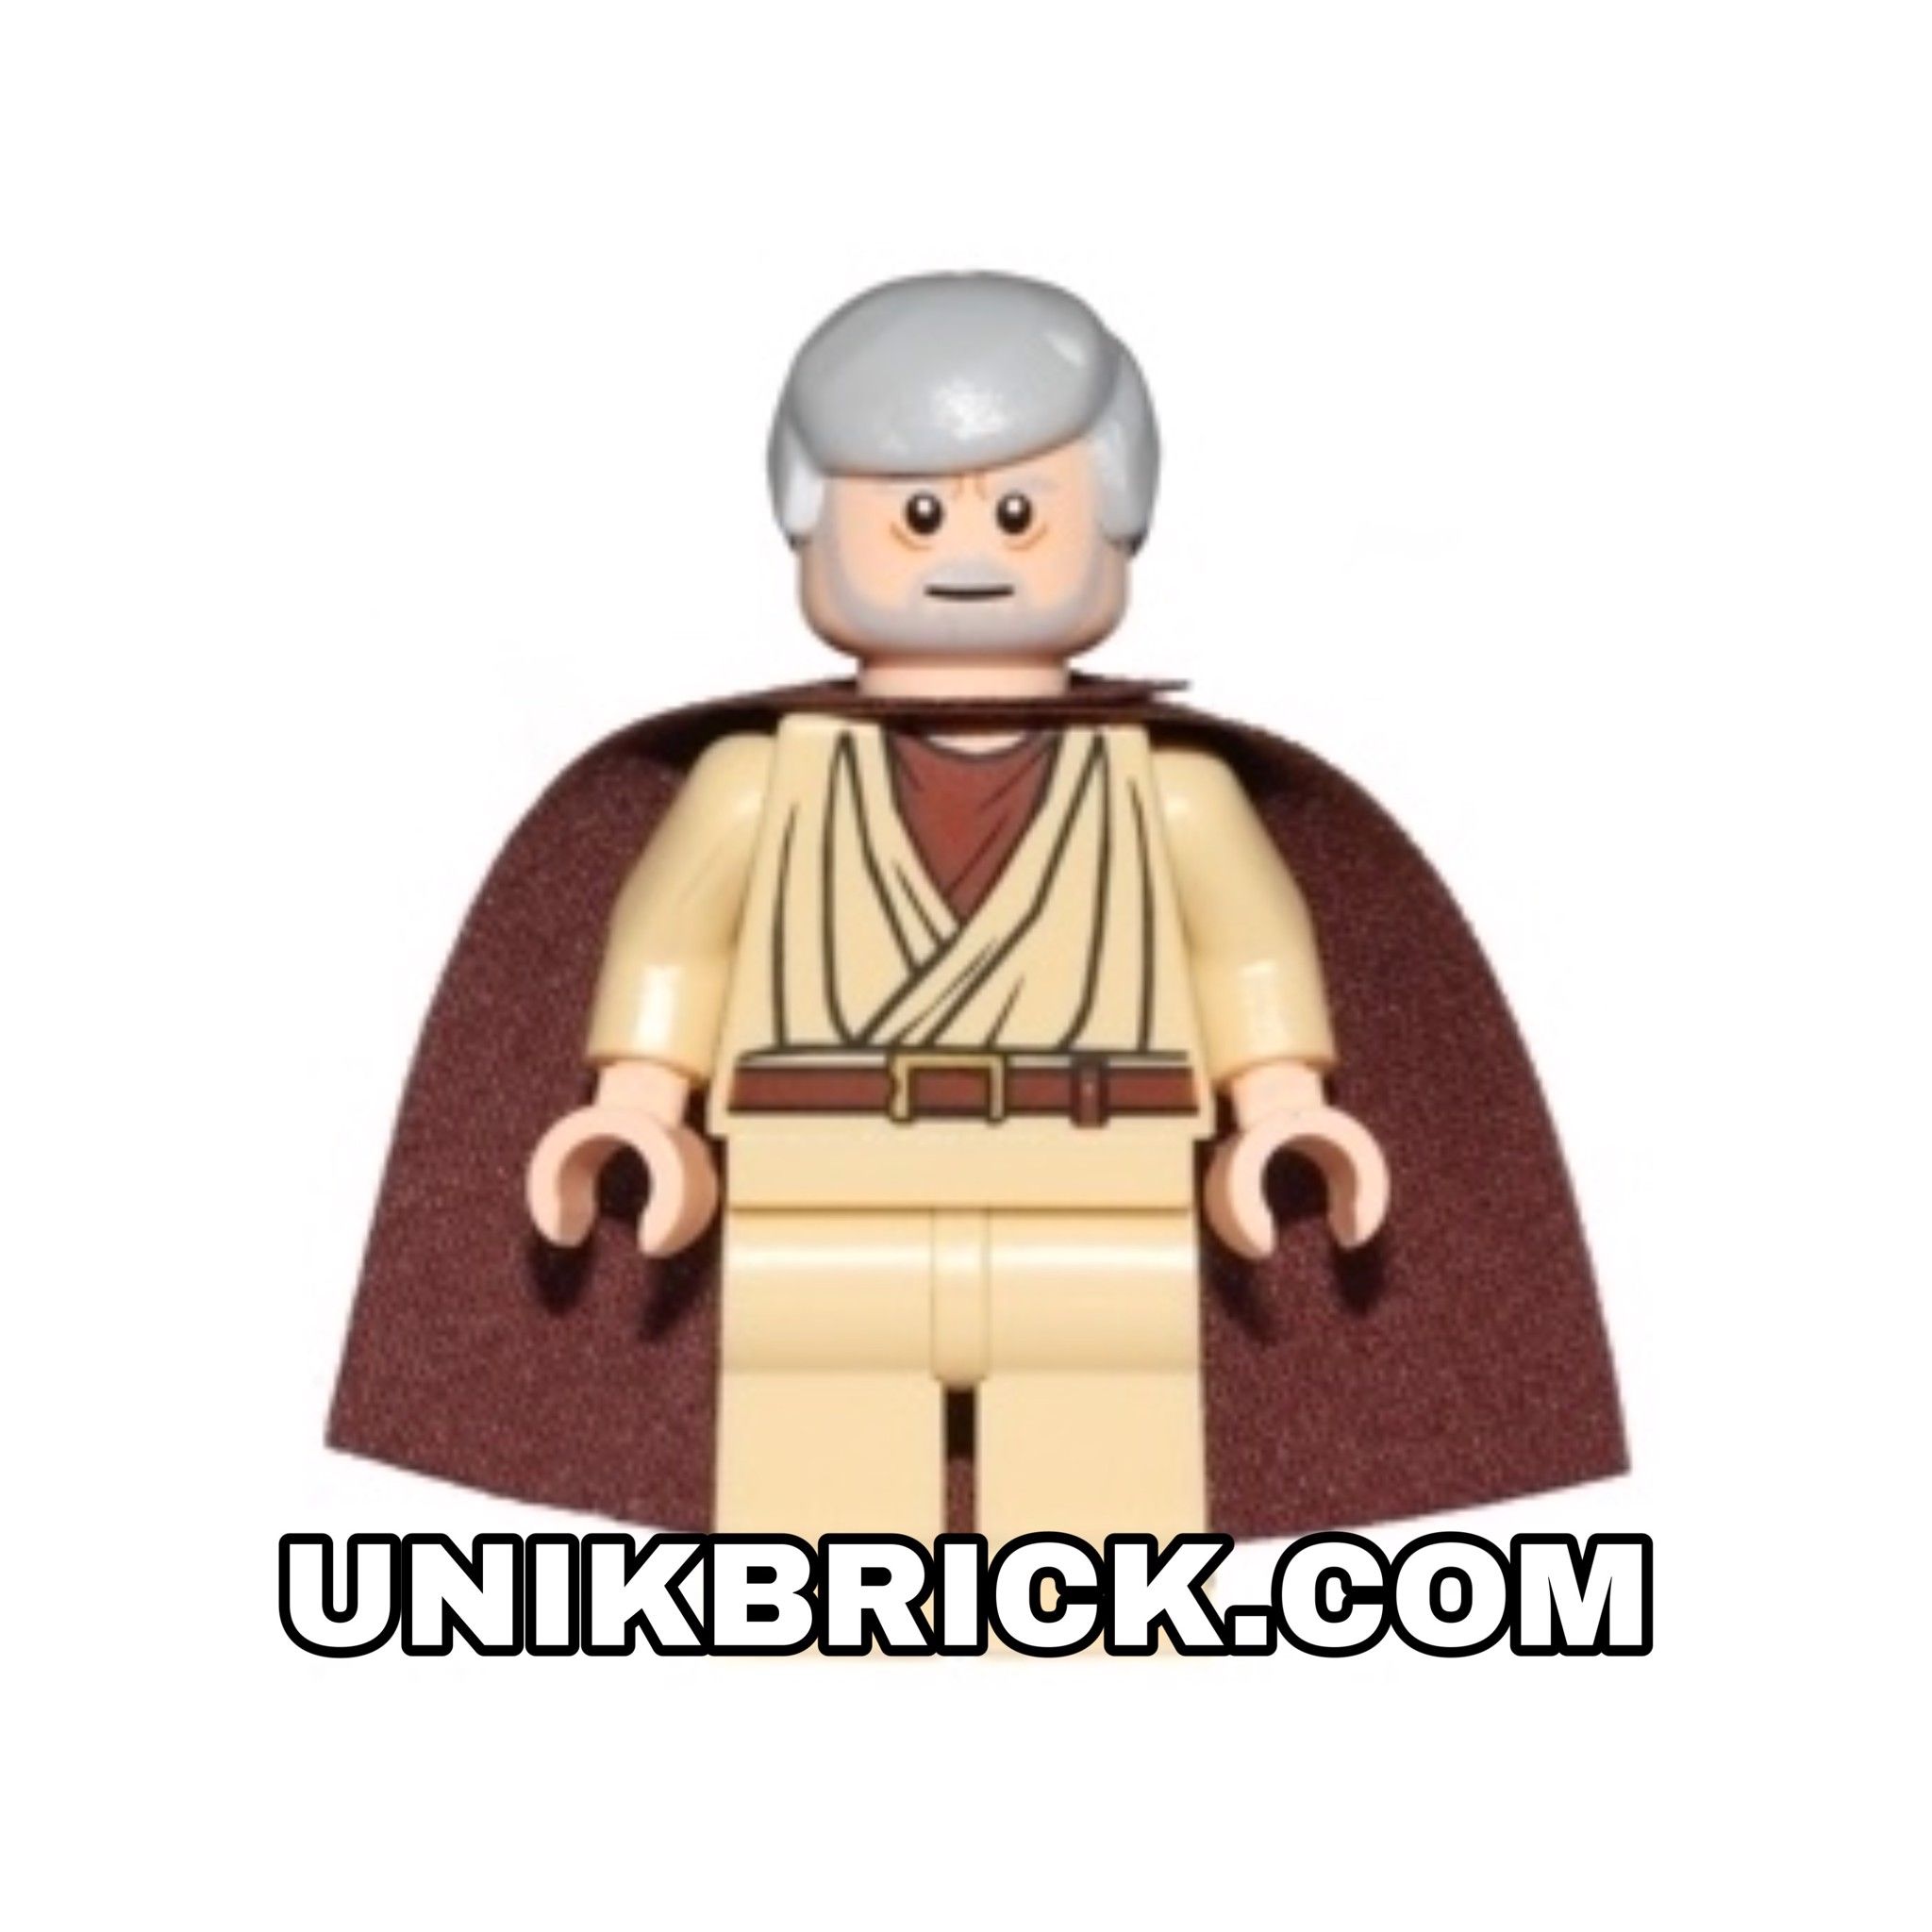 [ORDER ITEMS] LEGO Obi-Wan Kenobi Old Standard Cape with Pupils